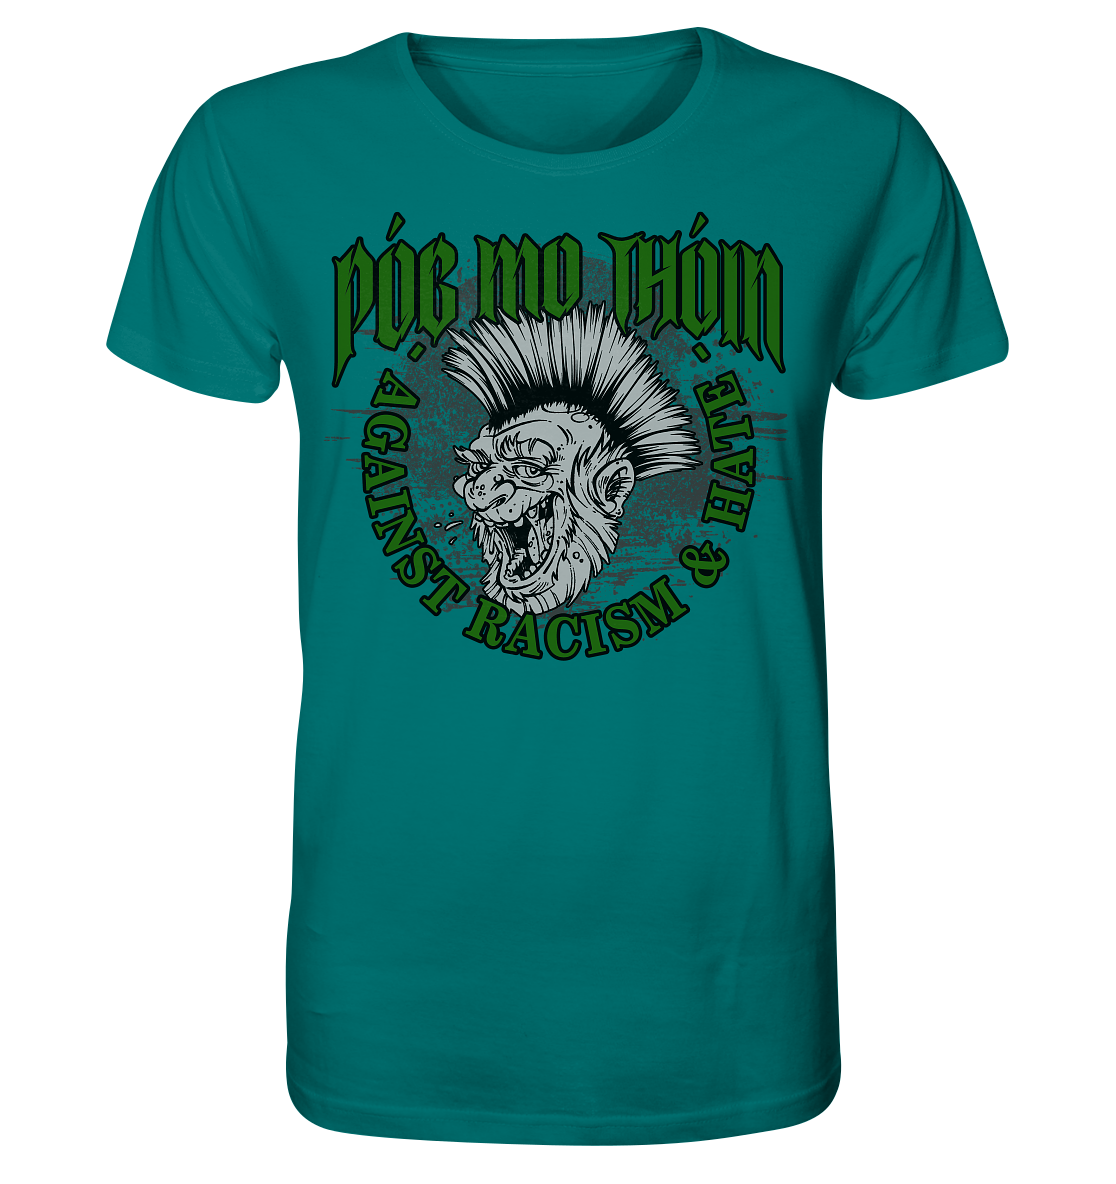 Póg Mo Thóin Streetwear "Against Racism & Hate" - Organic Shirt